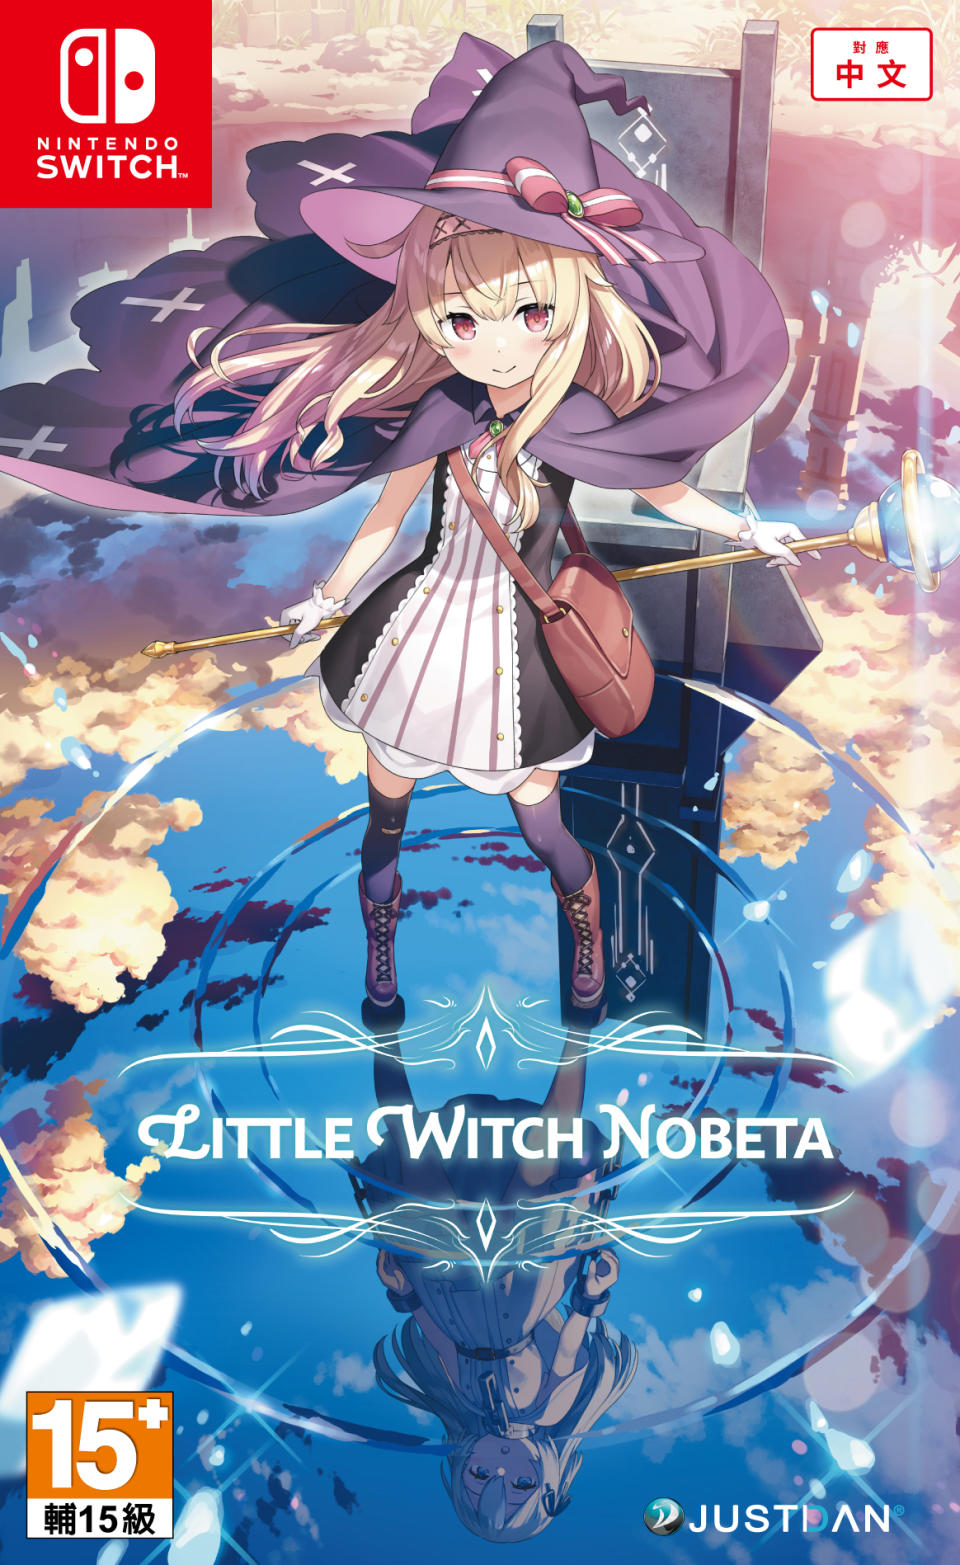 《Little Witch Nobeta》將於9/29發售正式版